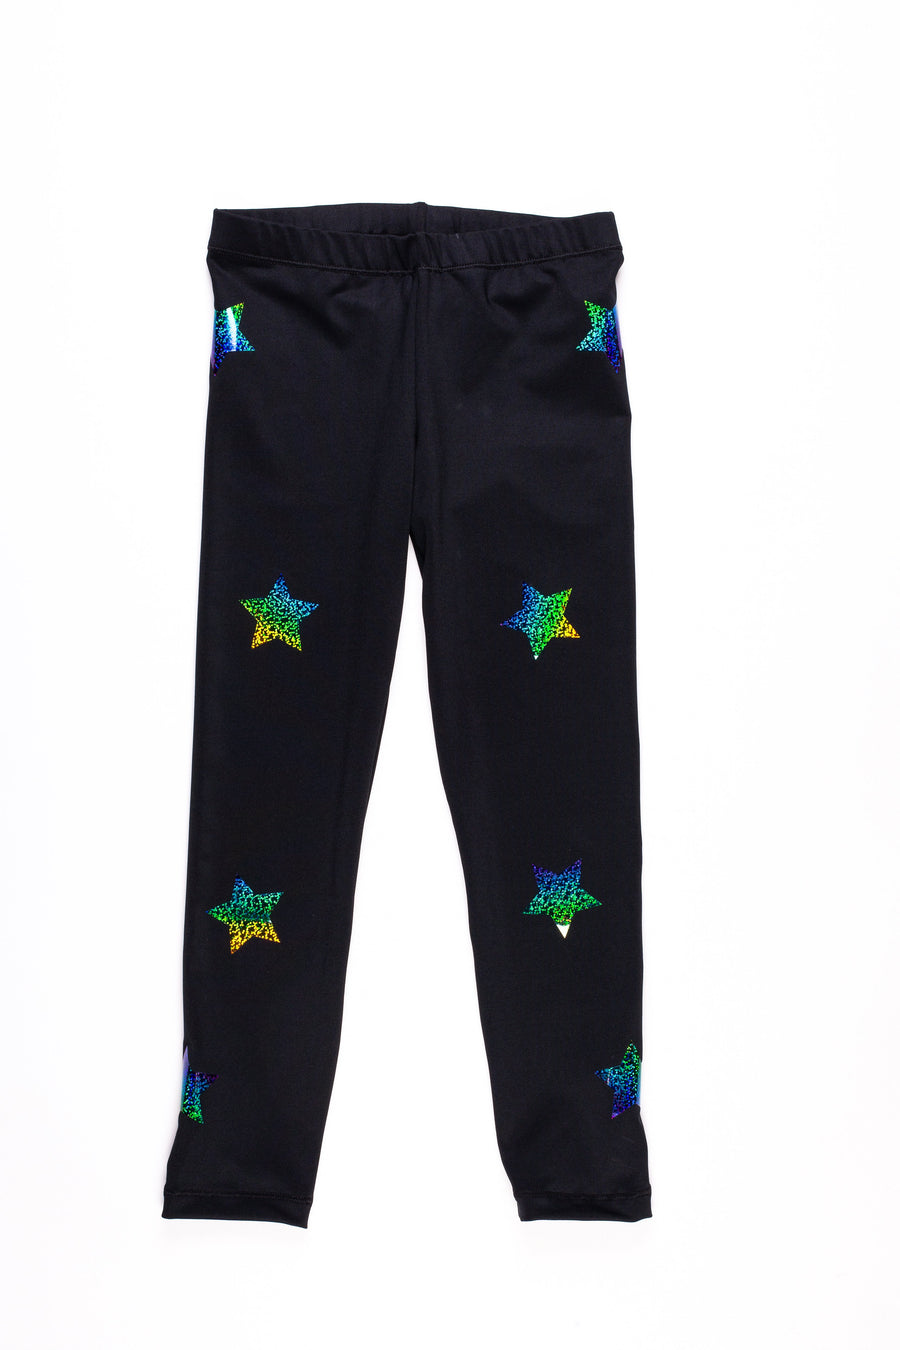 Stars Multicolor Black Leggings-Legging-Fanilu 